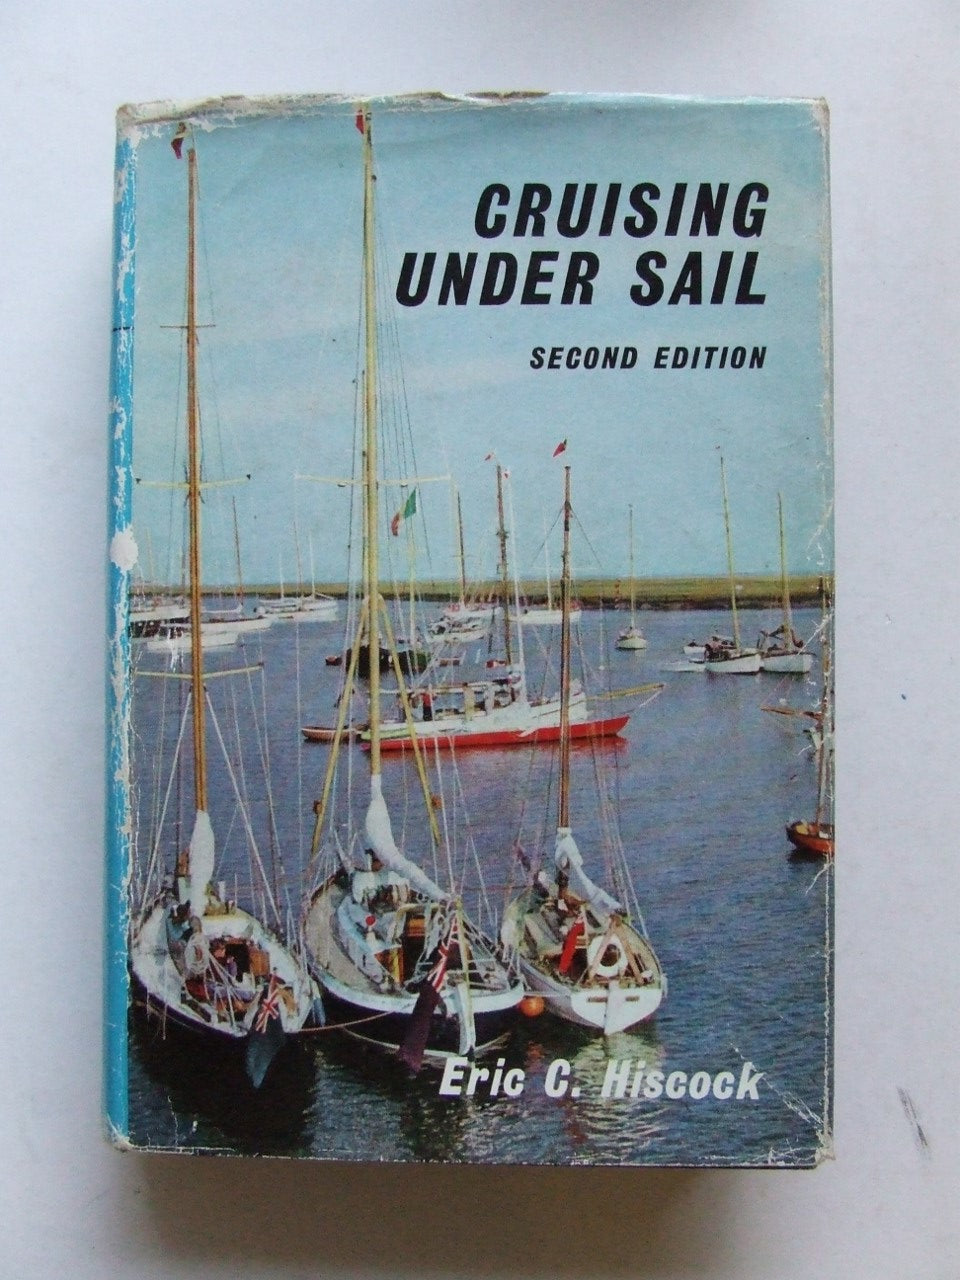 Cruising Under Sail